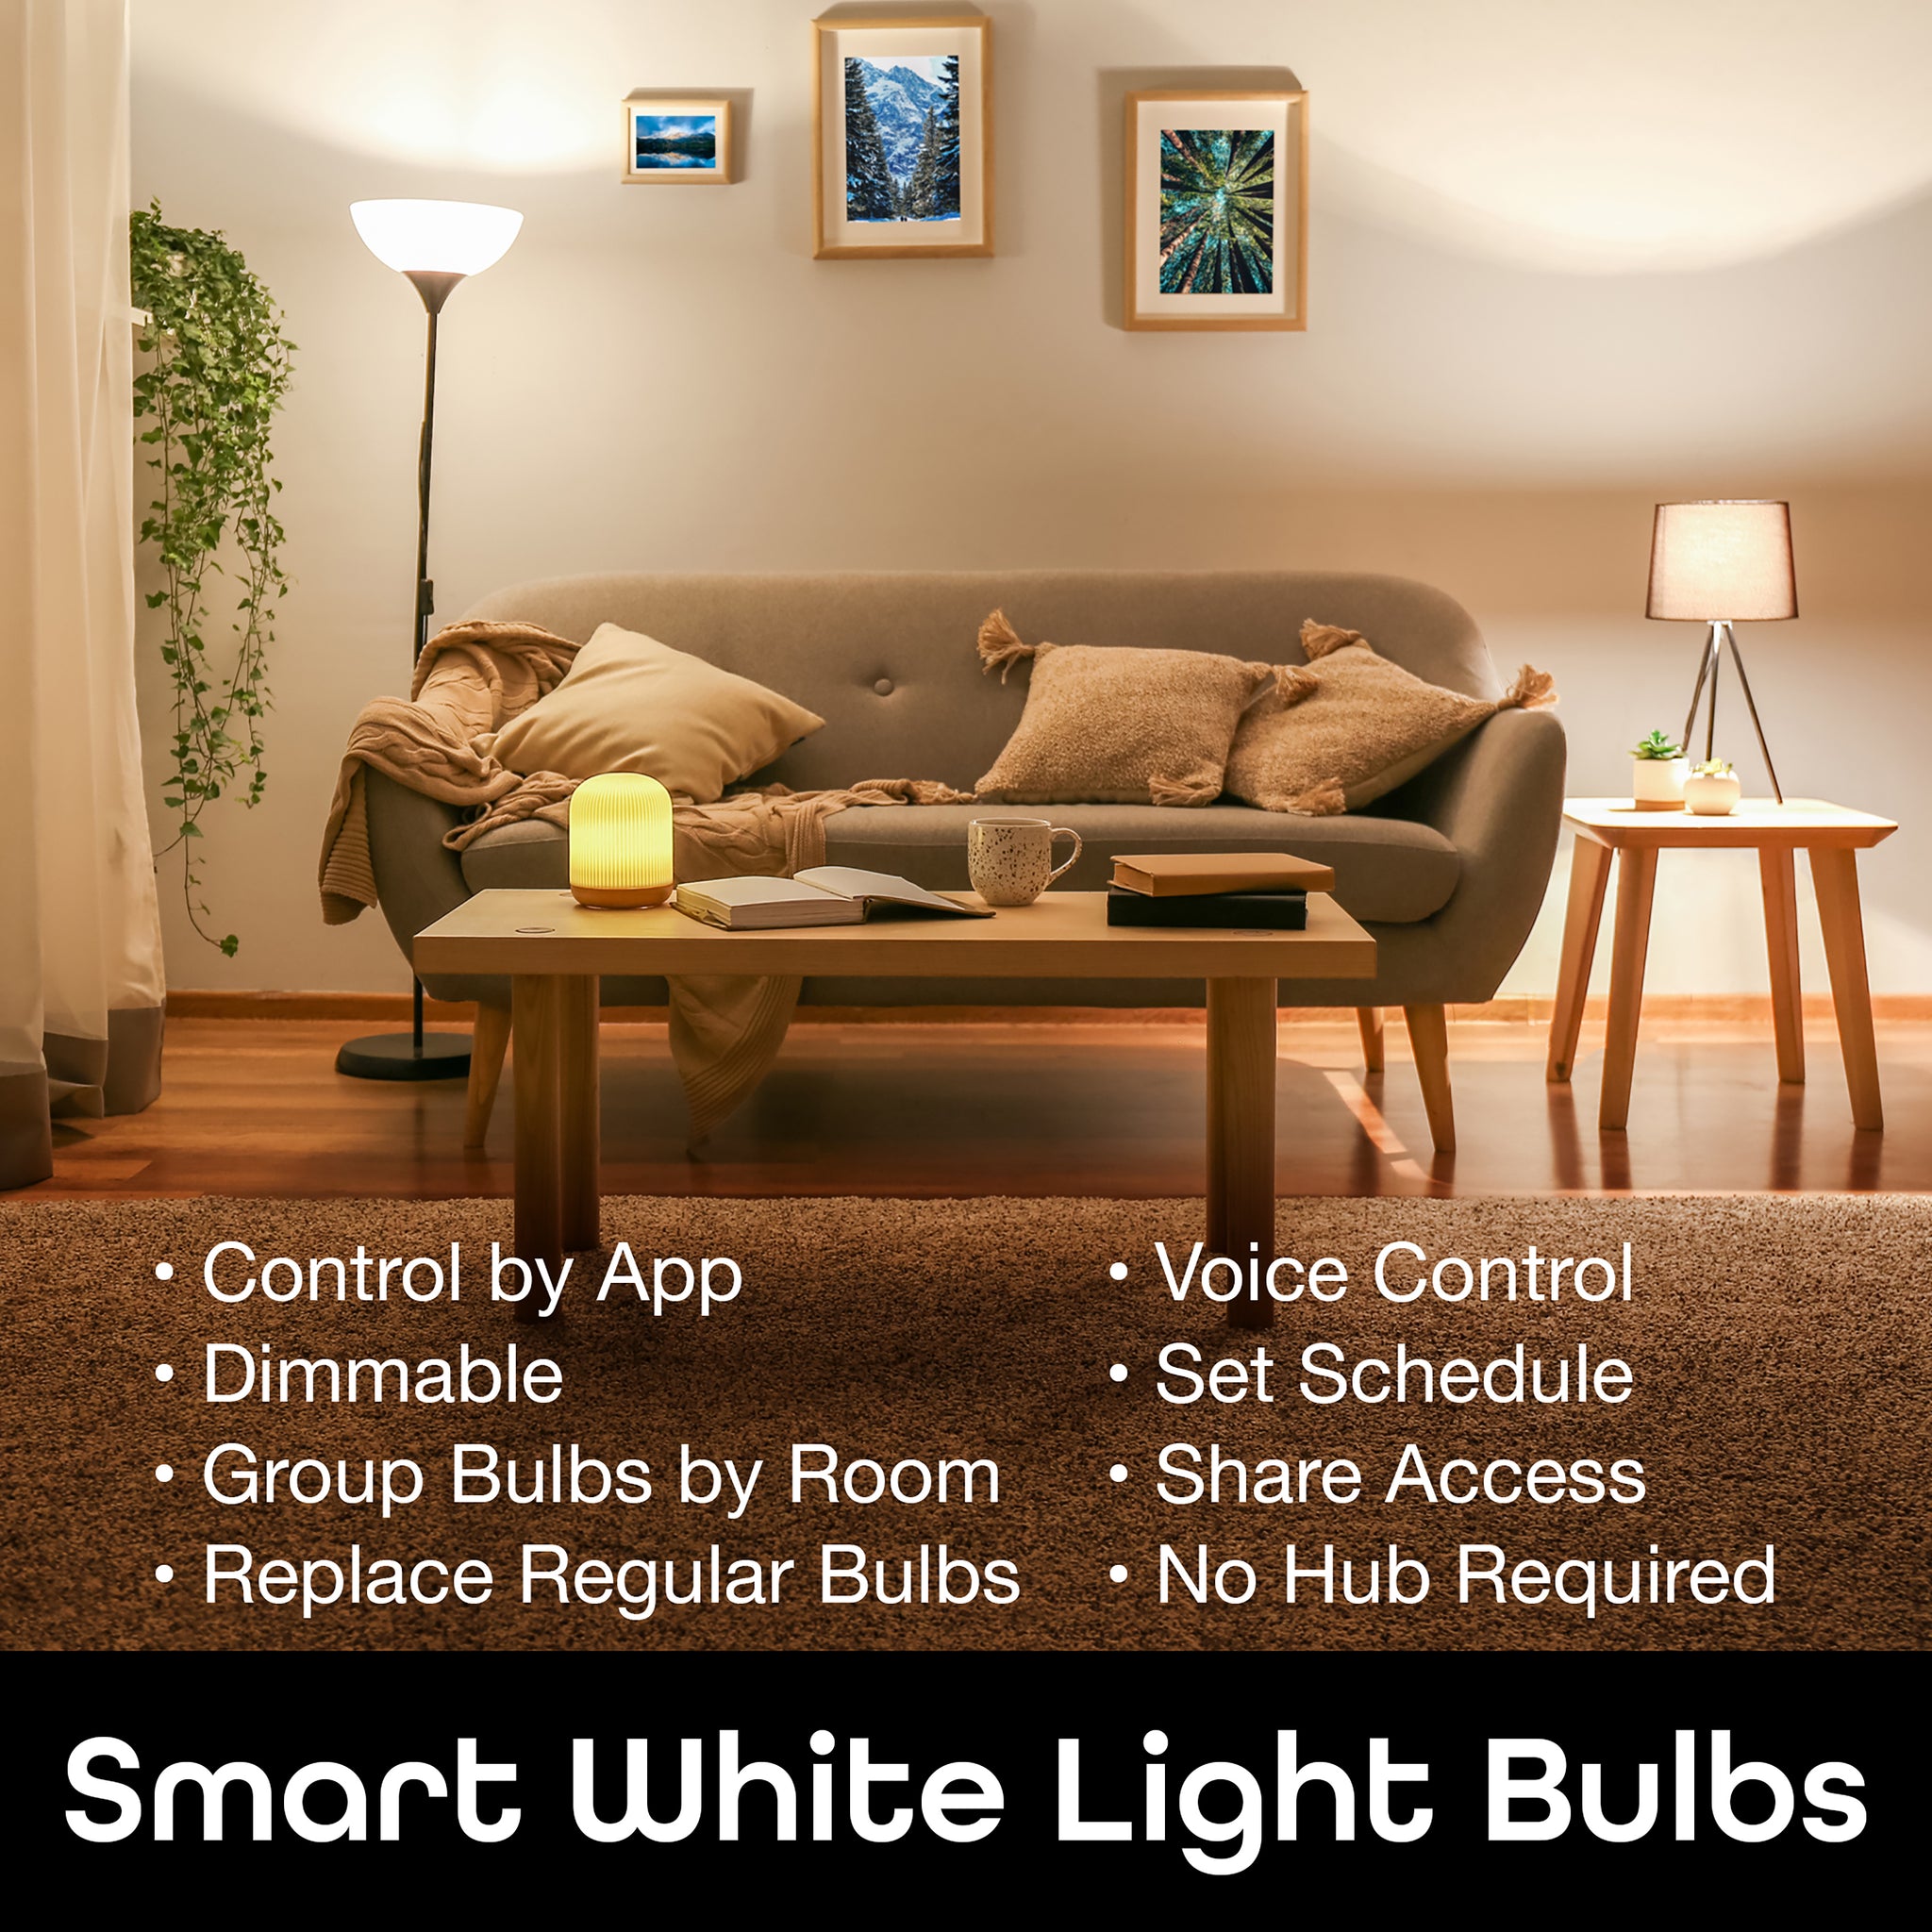 Geeni LUX 800 Warm White A19 E26 Smart LED Bulb (3-Pack)